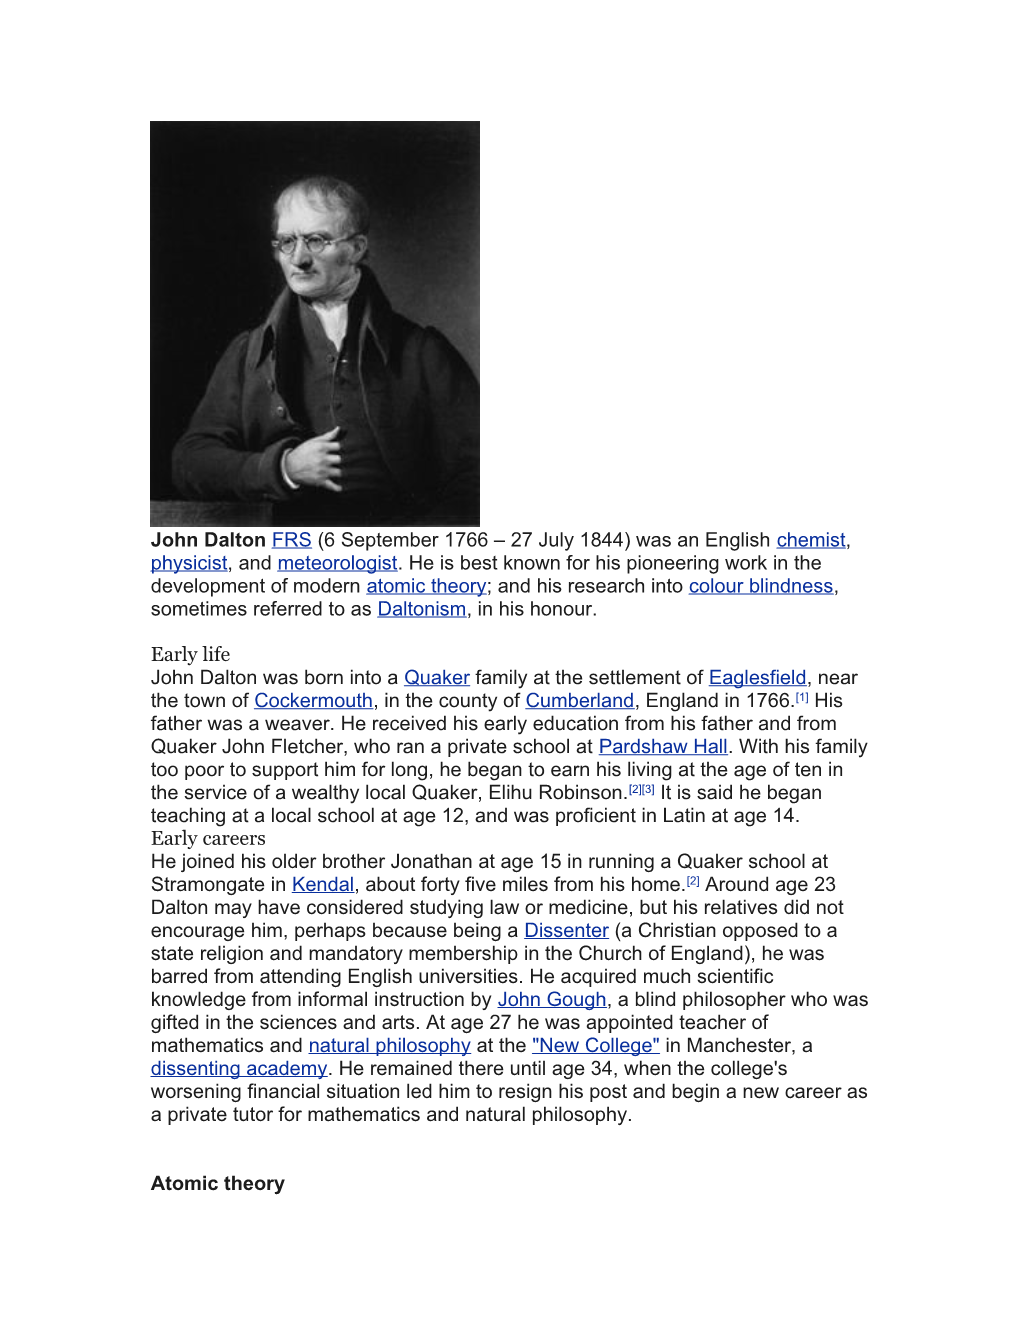 John Dalton Was Born Into a Quaker Family at the Settlement of Eaglesfield, Near the Town